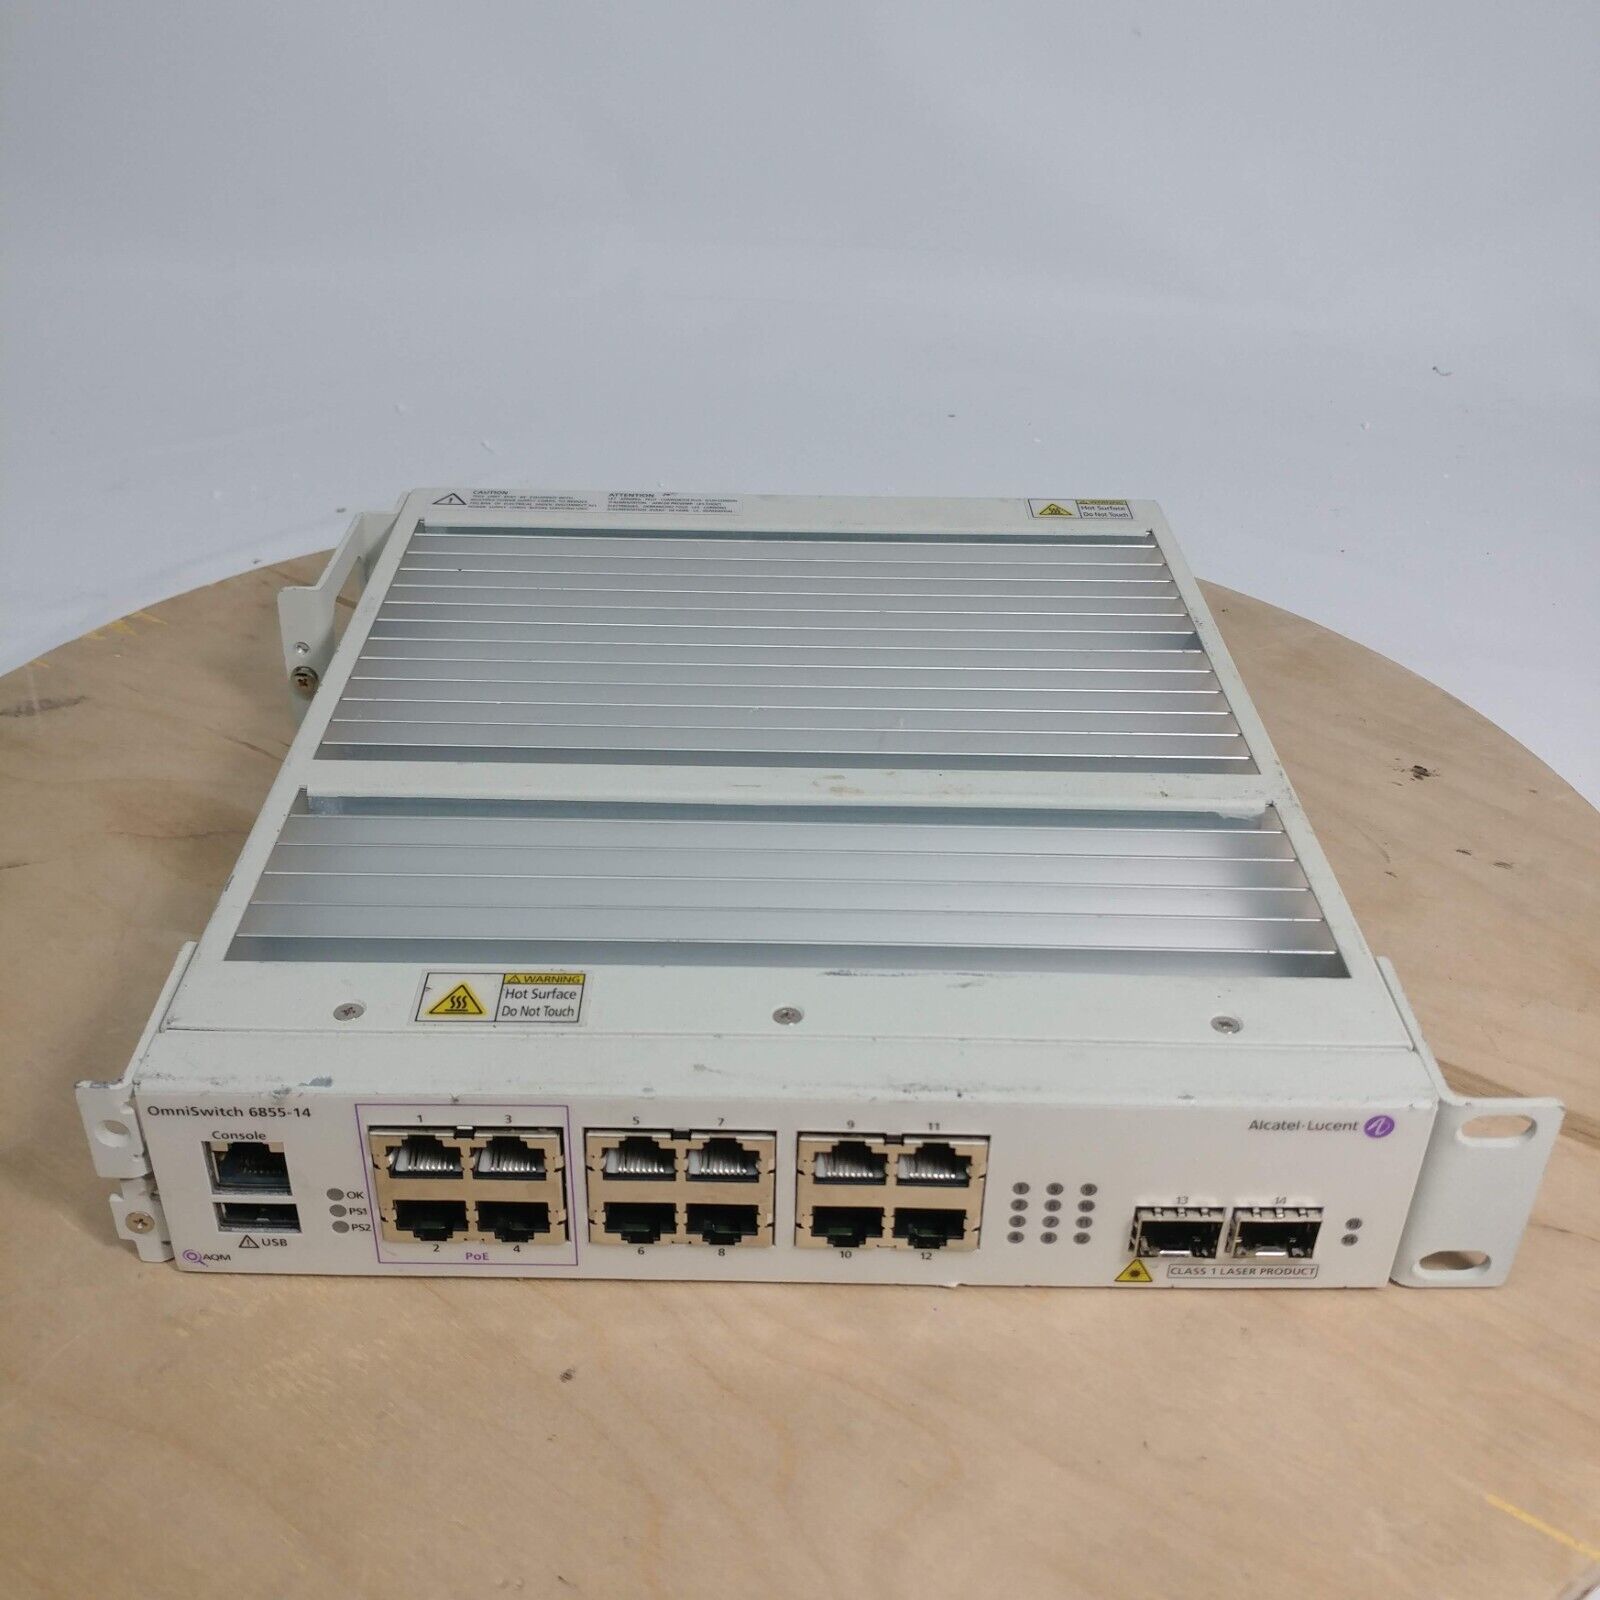 Alcatel Lucent OS6855-14 Omni Switch 6855-14 Gigabit Ethernet No Power Supply